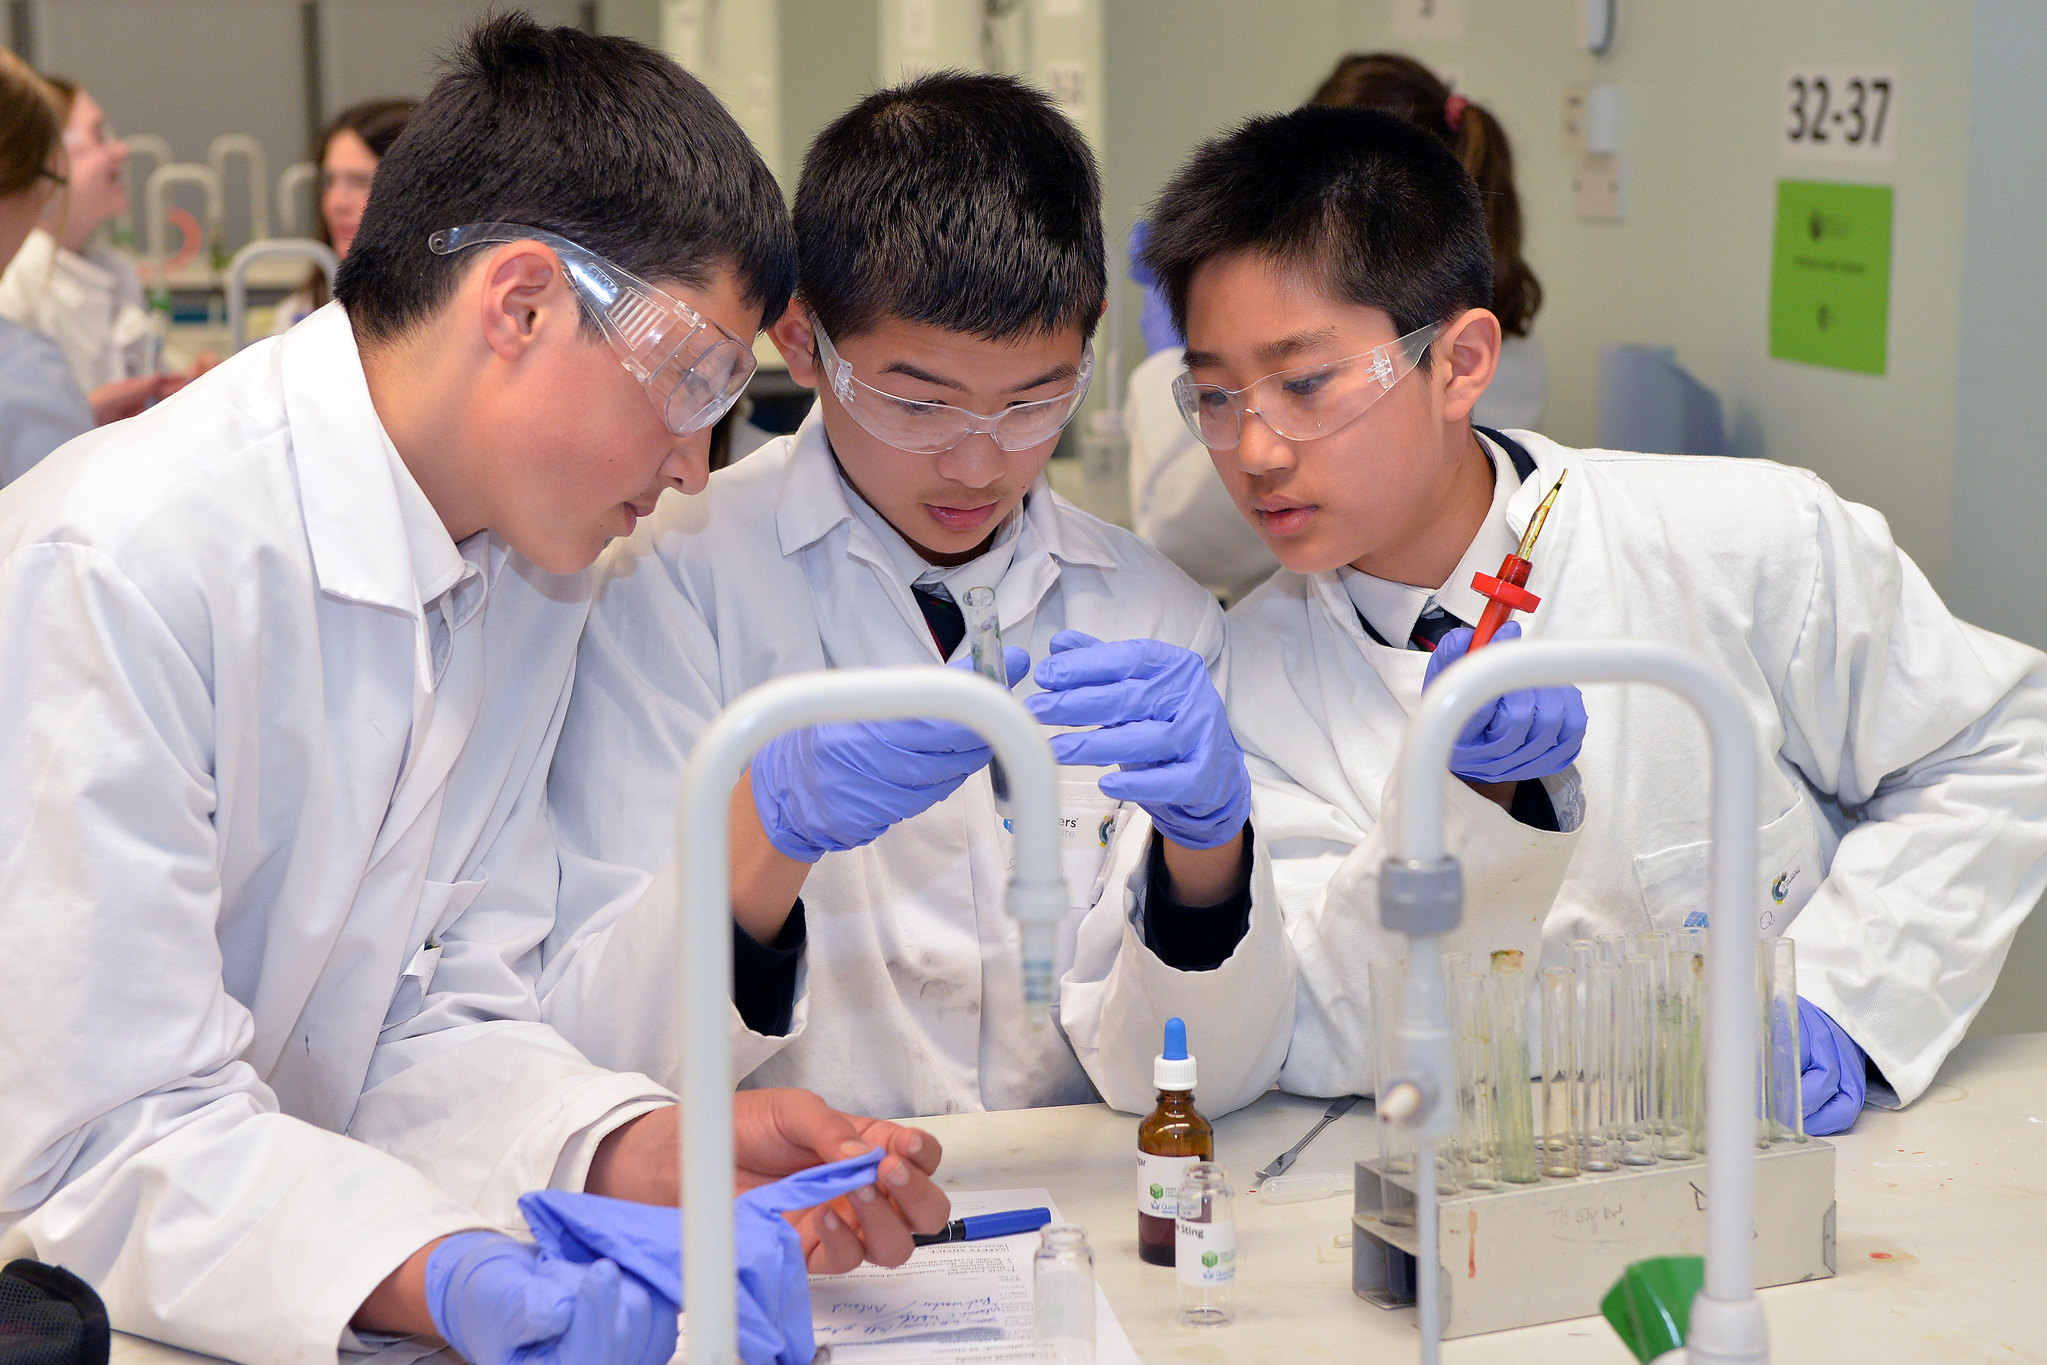 Three school children in lab coats look at a test tube full of a dark liquid